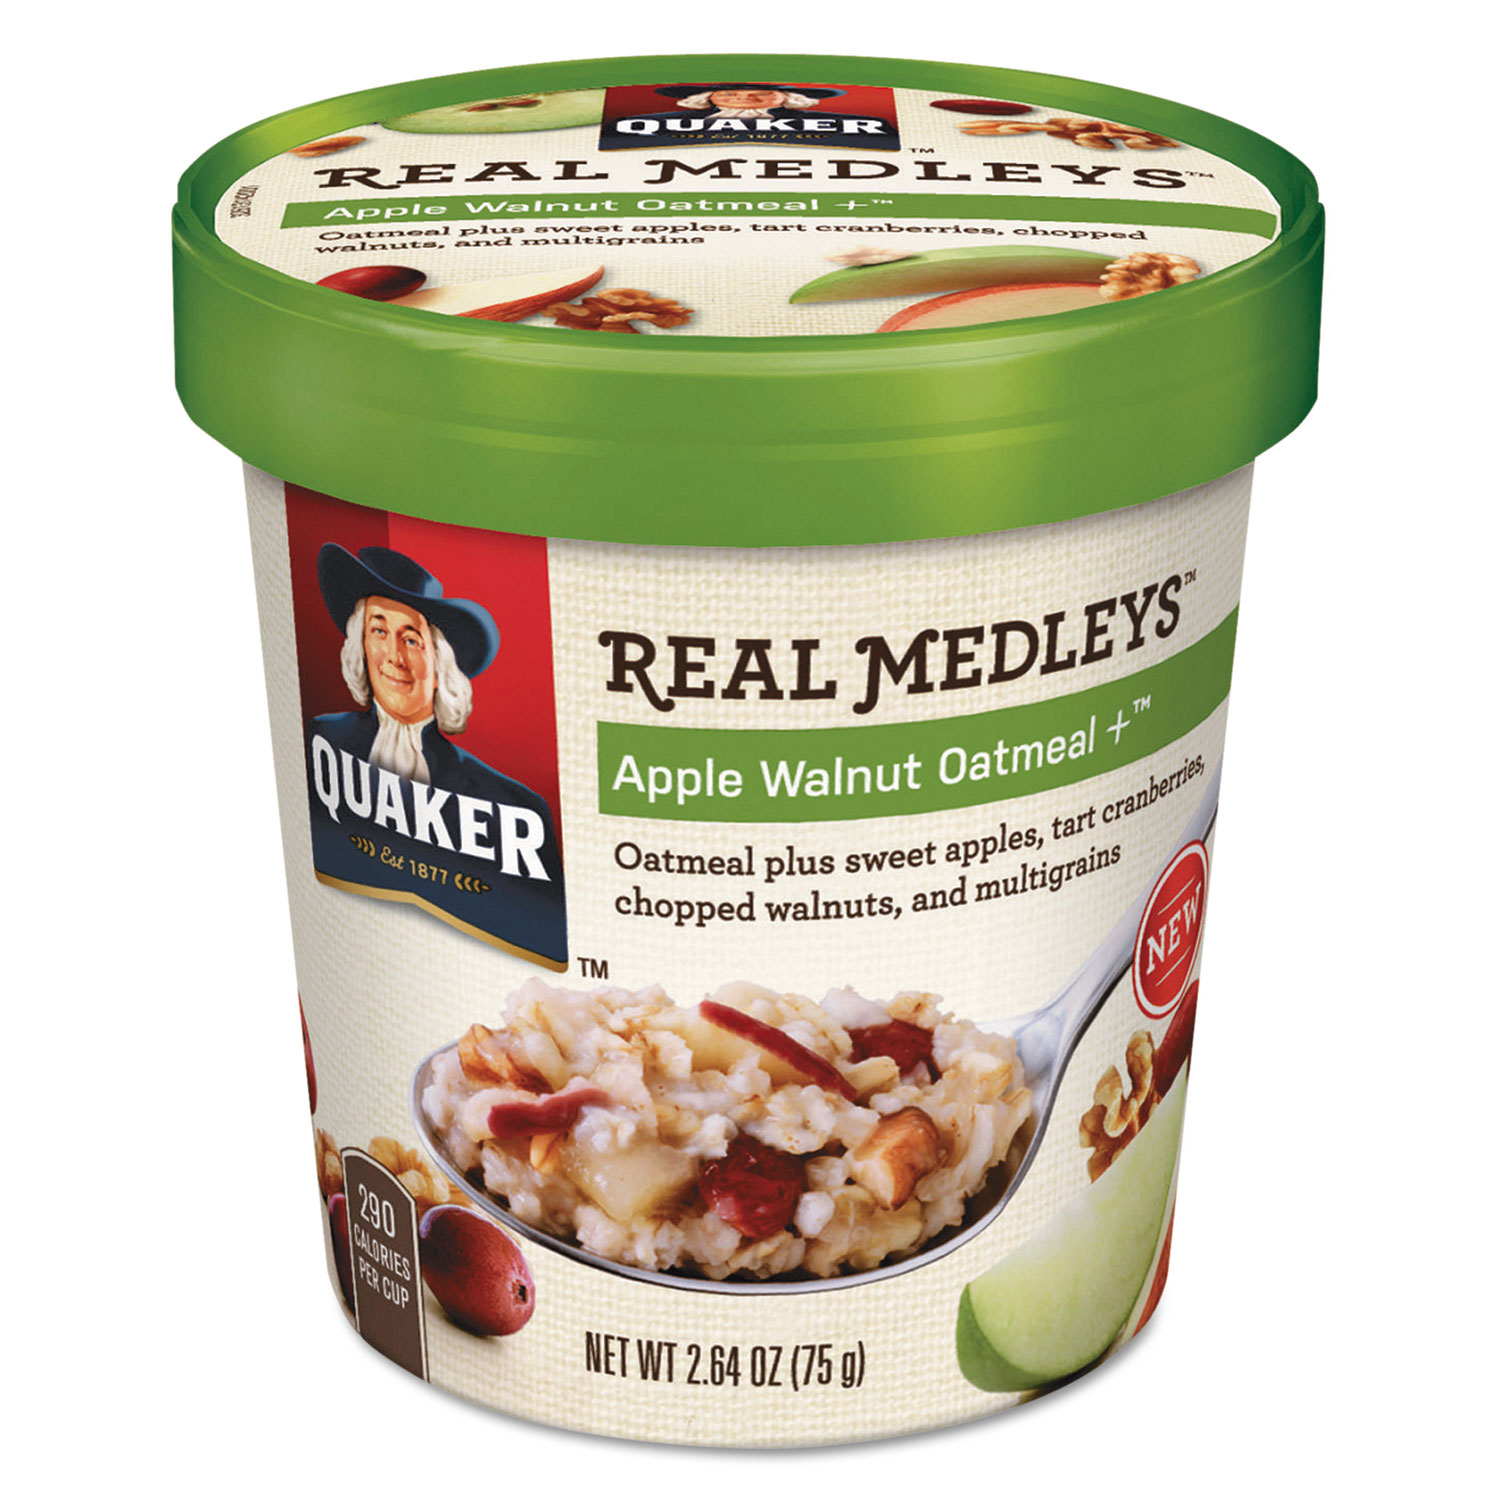  Quaker 030000315507 Real Medleys Oatmeal, Apple Walnut Oatmeal+, 2.64oz Cup, 12/Carton (QKR15504) 